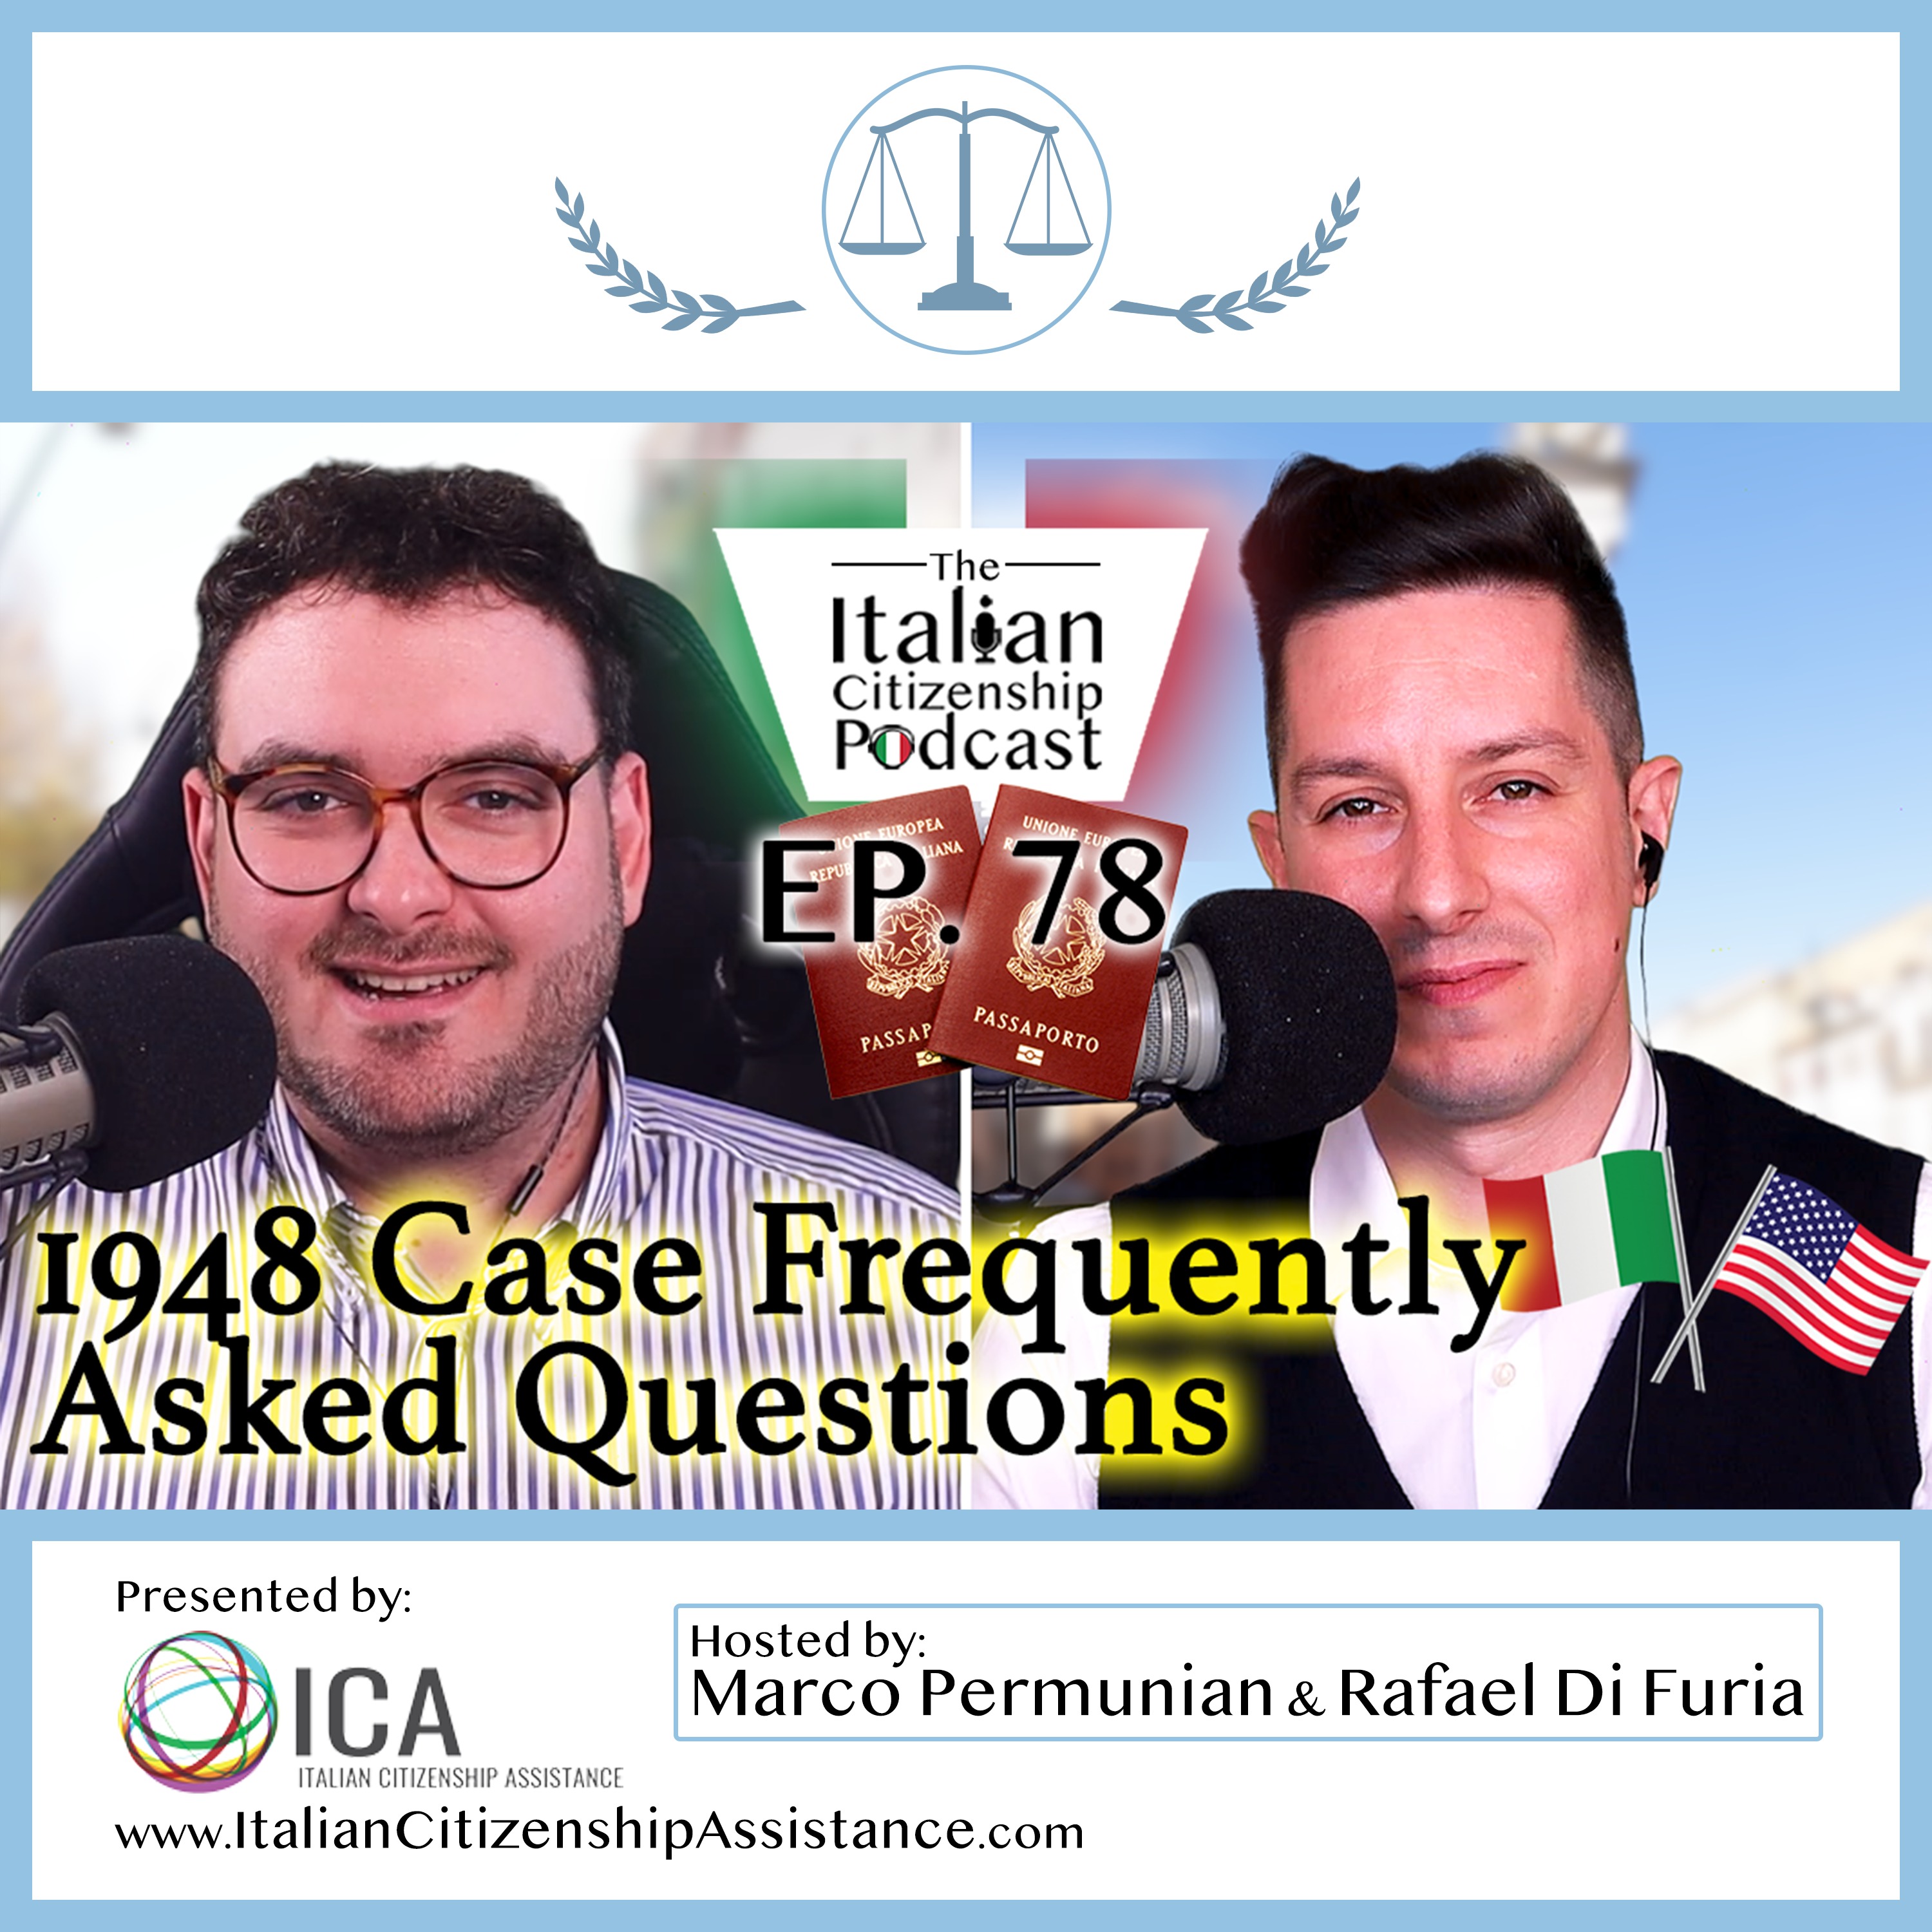 1948 Cases FAQ - Italian Citizenship FAQ n.5